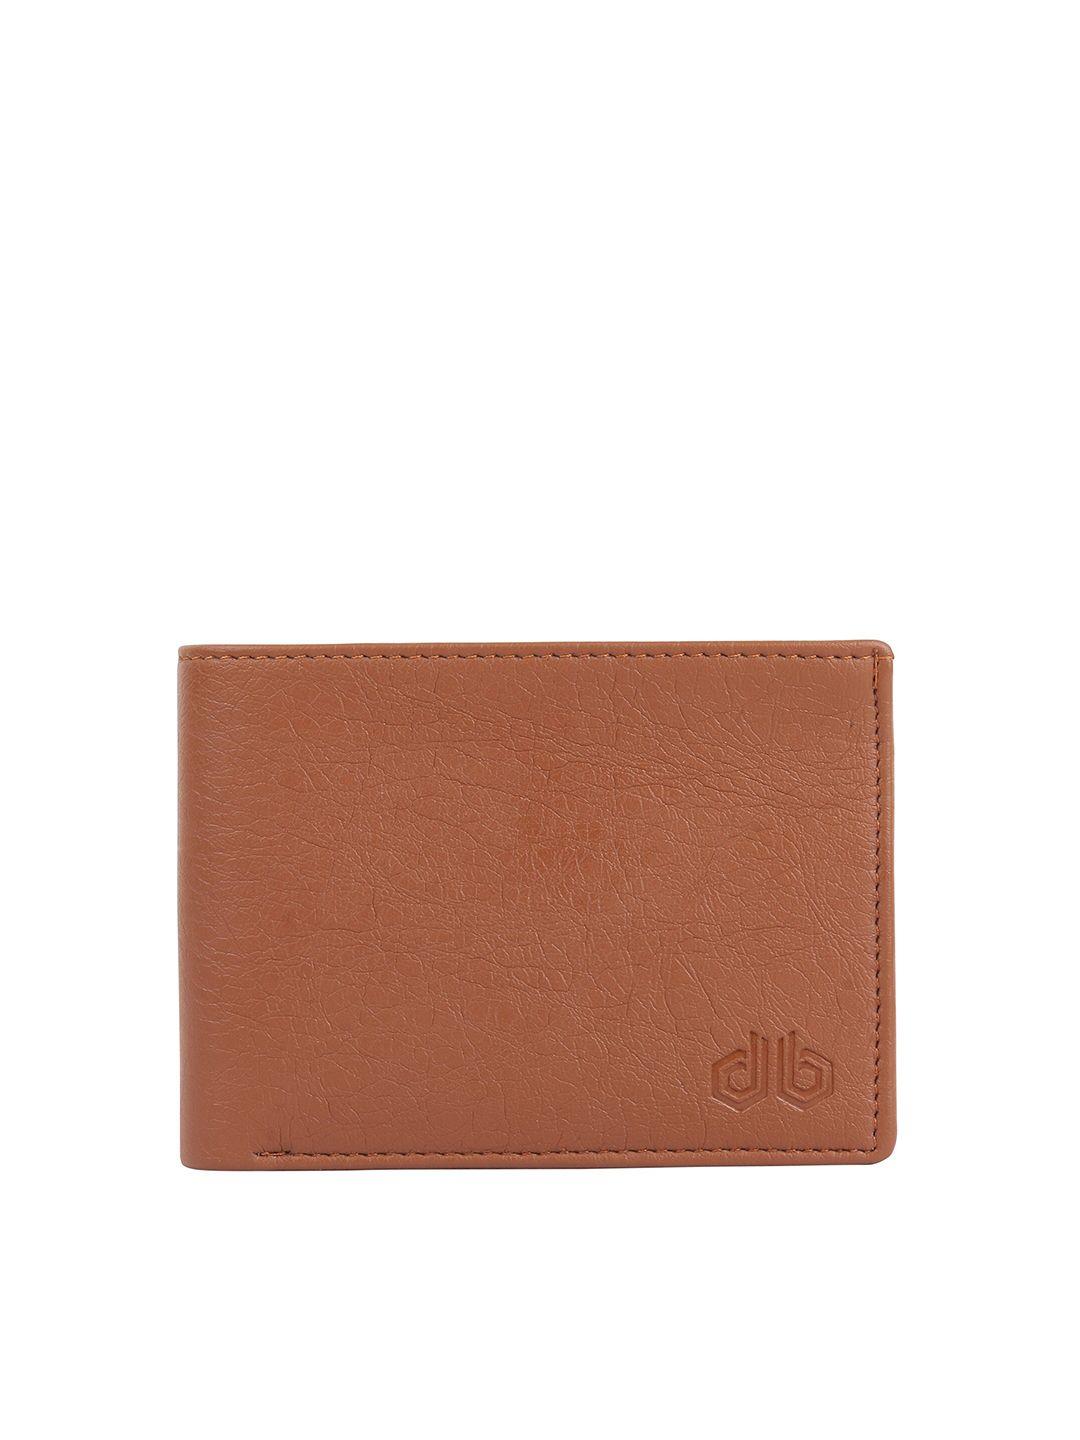 designer bugs men tan textured leather two fold wallet